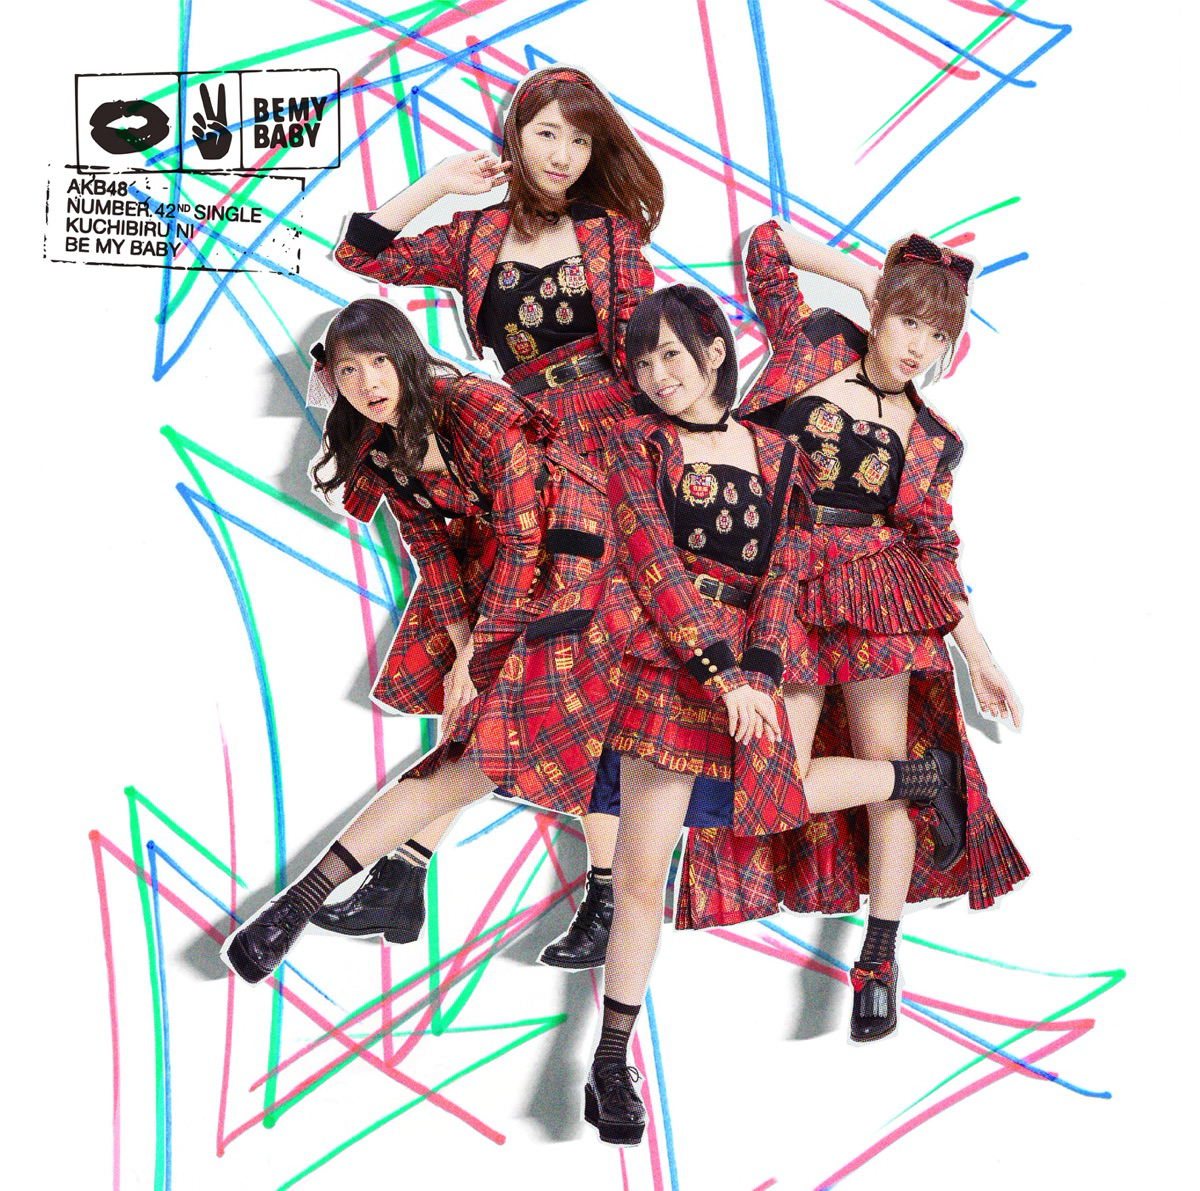 AKB48 - Nanka, Chotto, Kyu ni... (Team 4) Cover